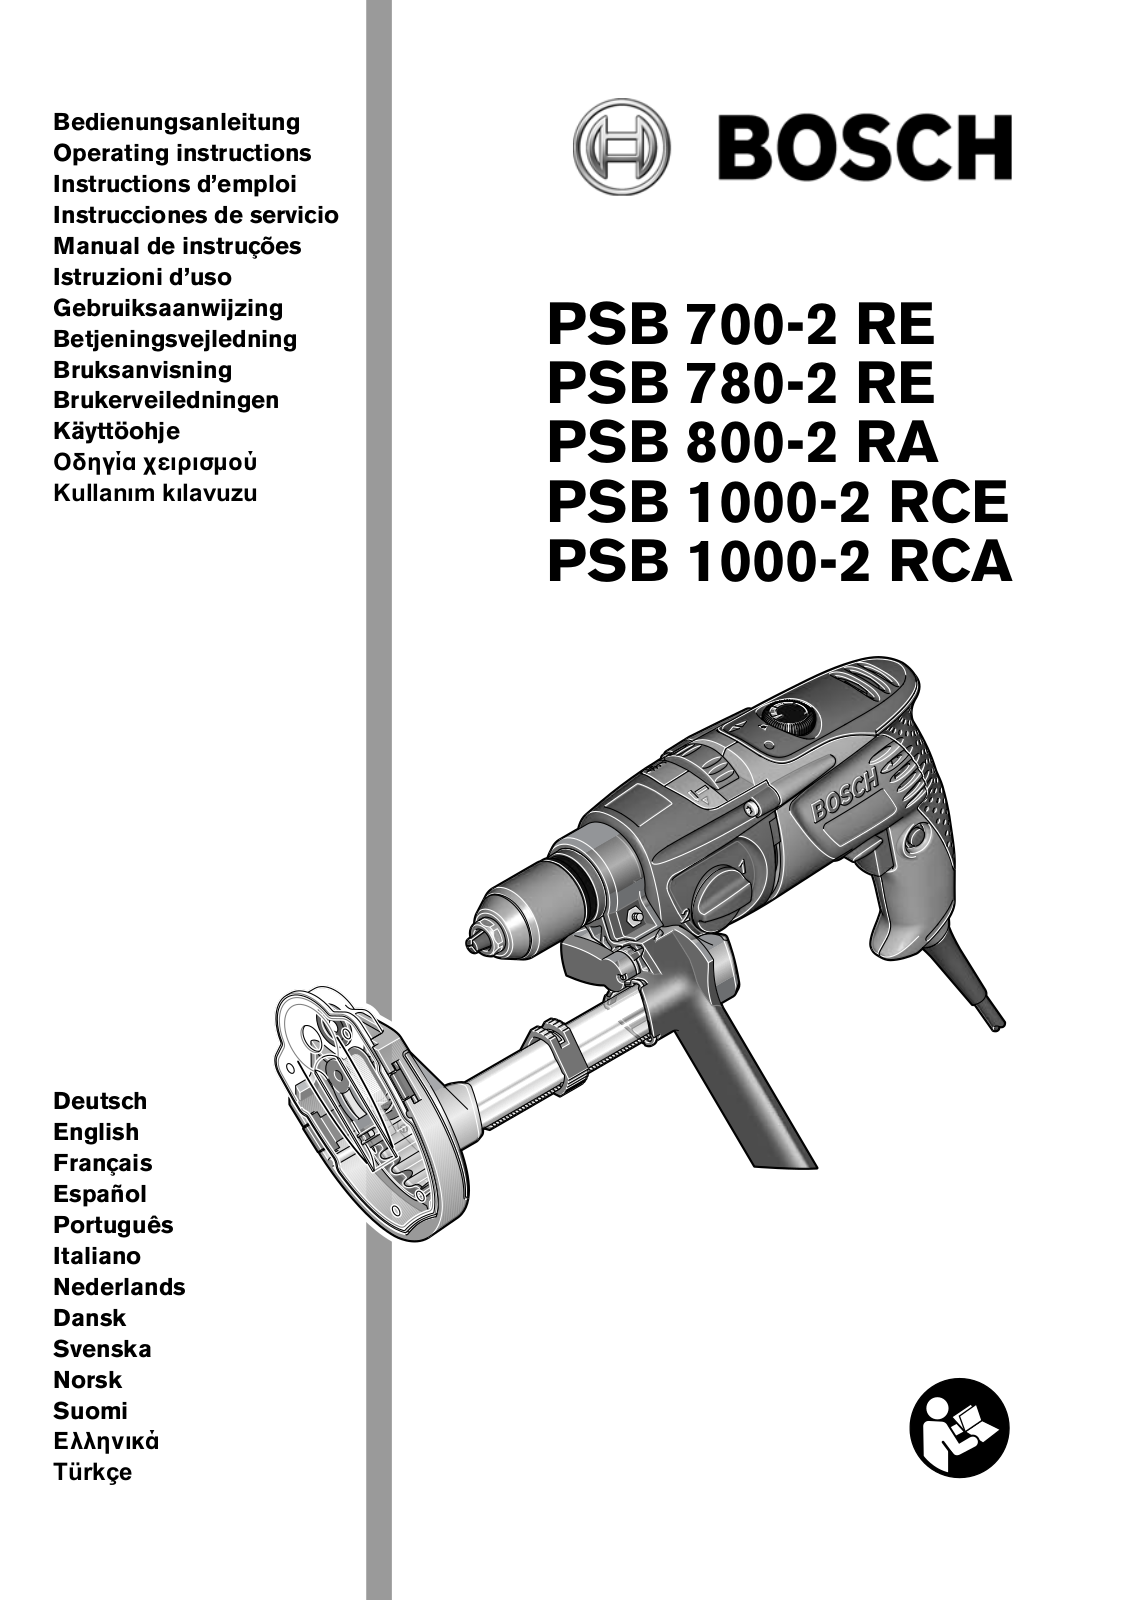 BOSCH PSB 1000-2 RCA, PSB 700-2 RE, PSB 800-2 RA User Manual